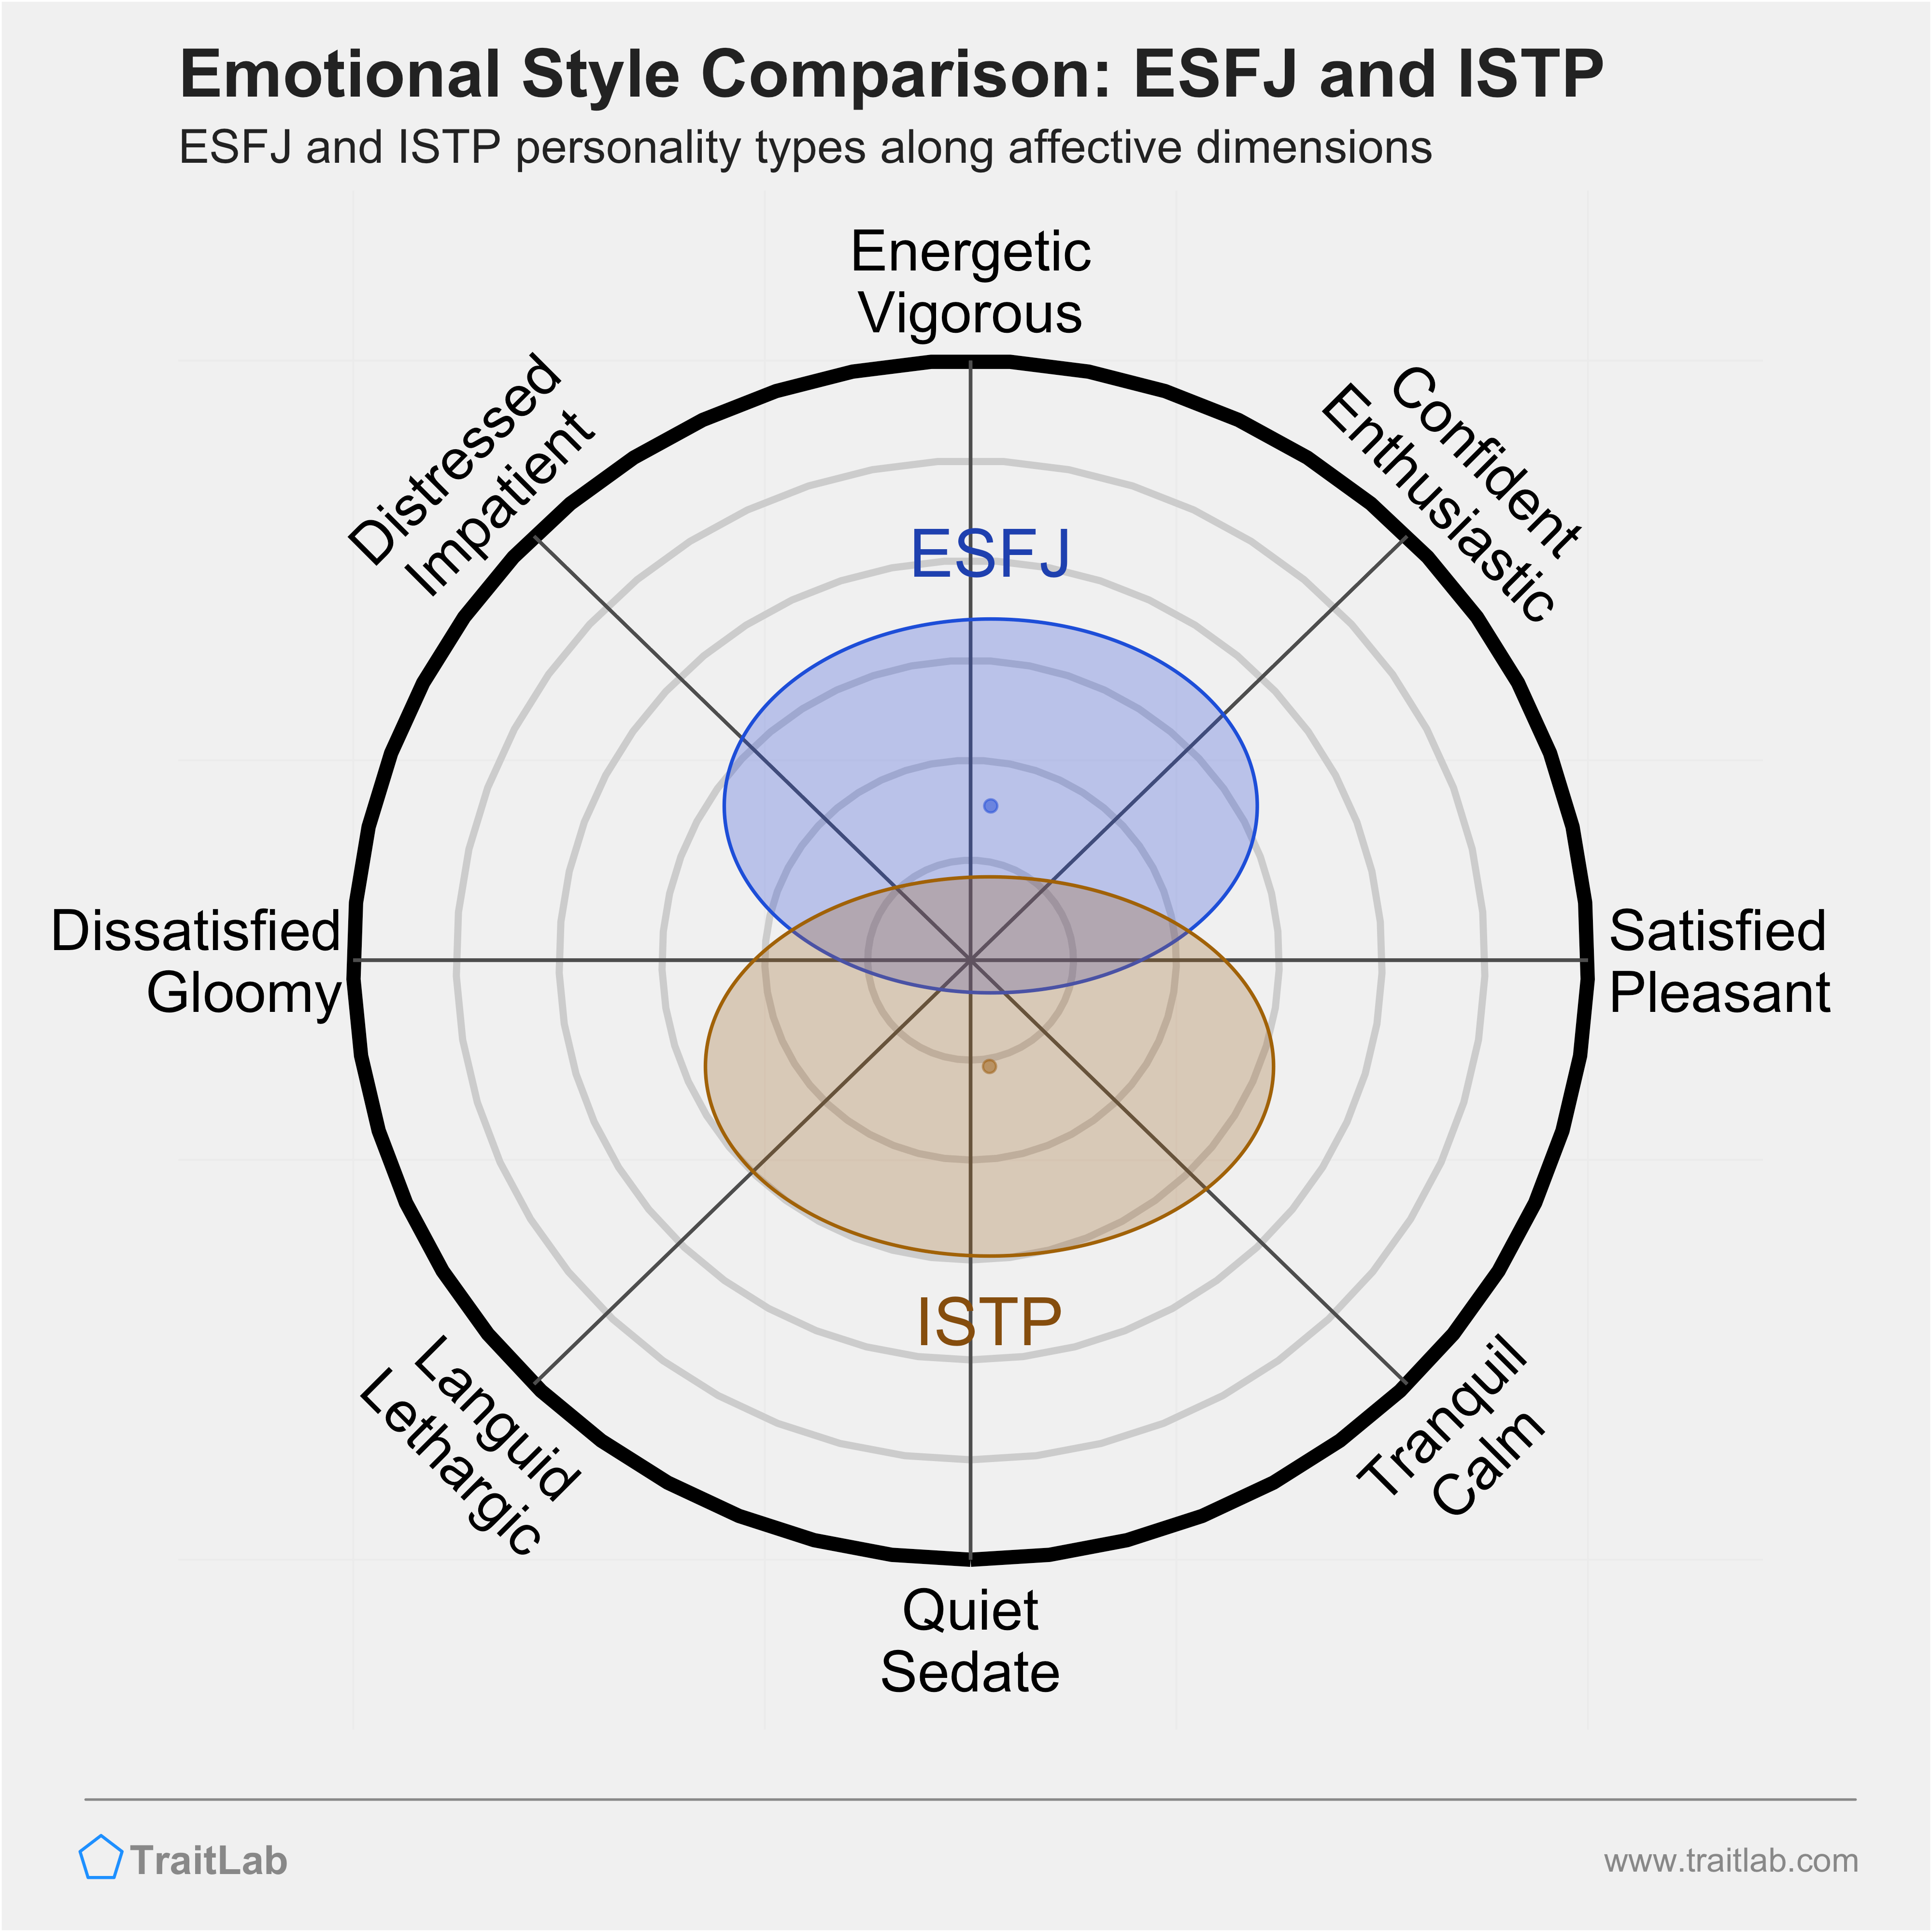 ESFJ and ISTP comparison across emotional (affective) dimensions